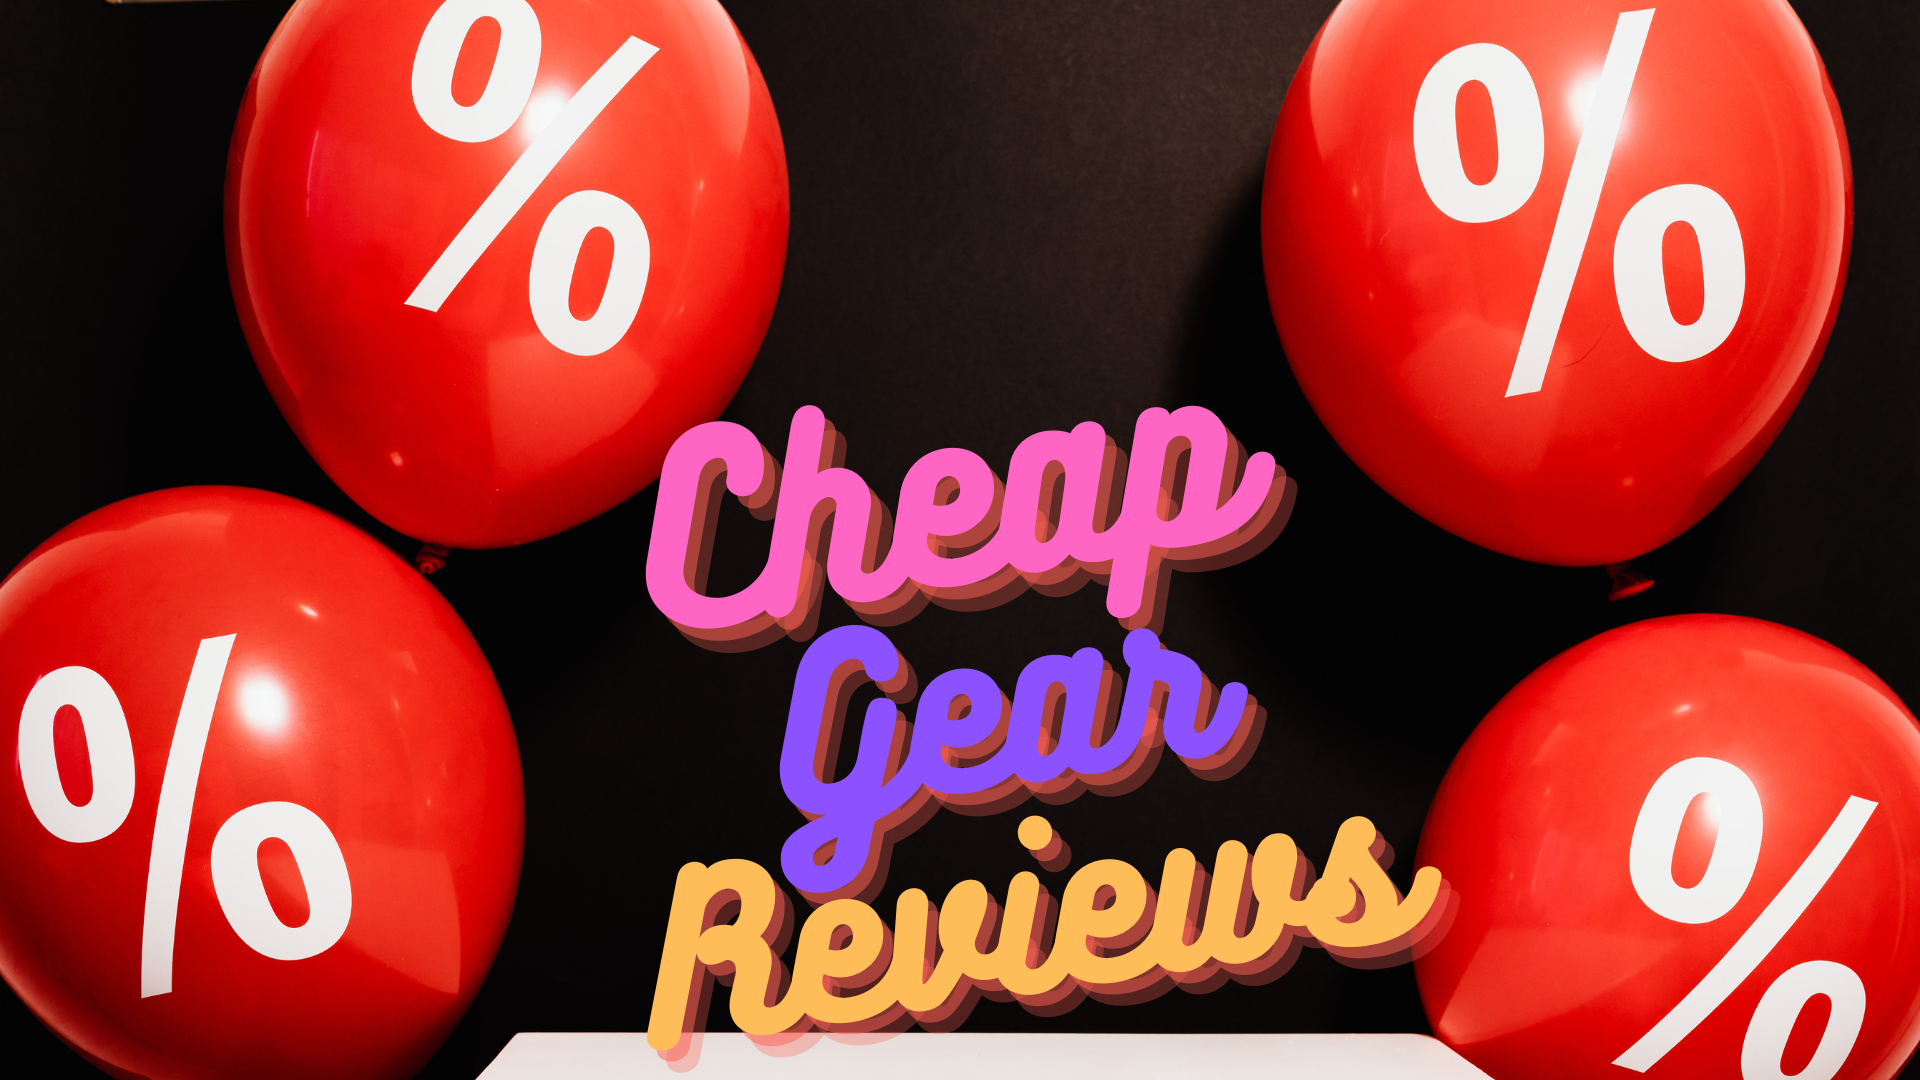 Gear review videos 